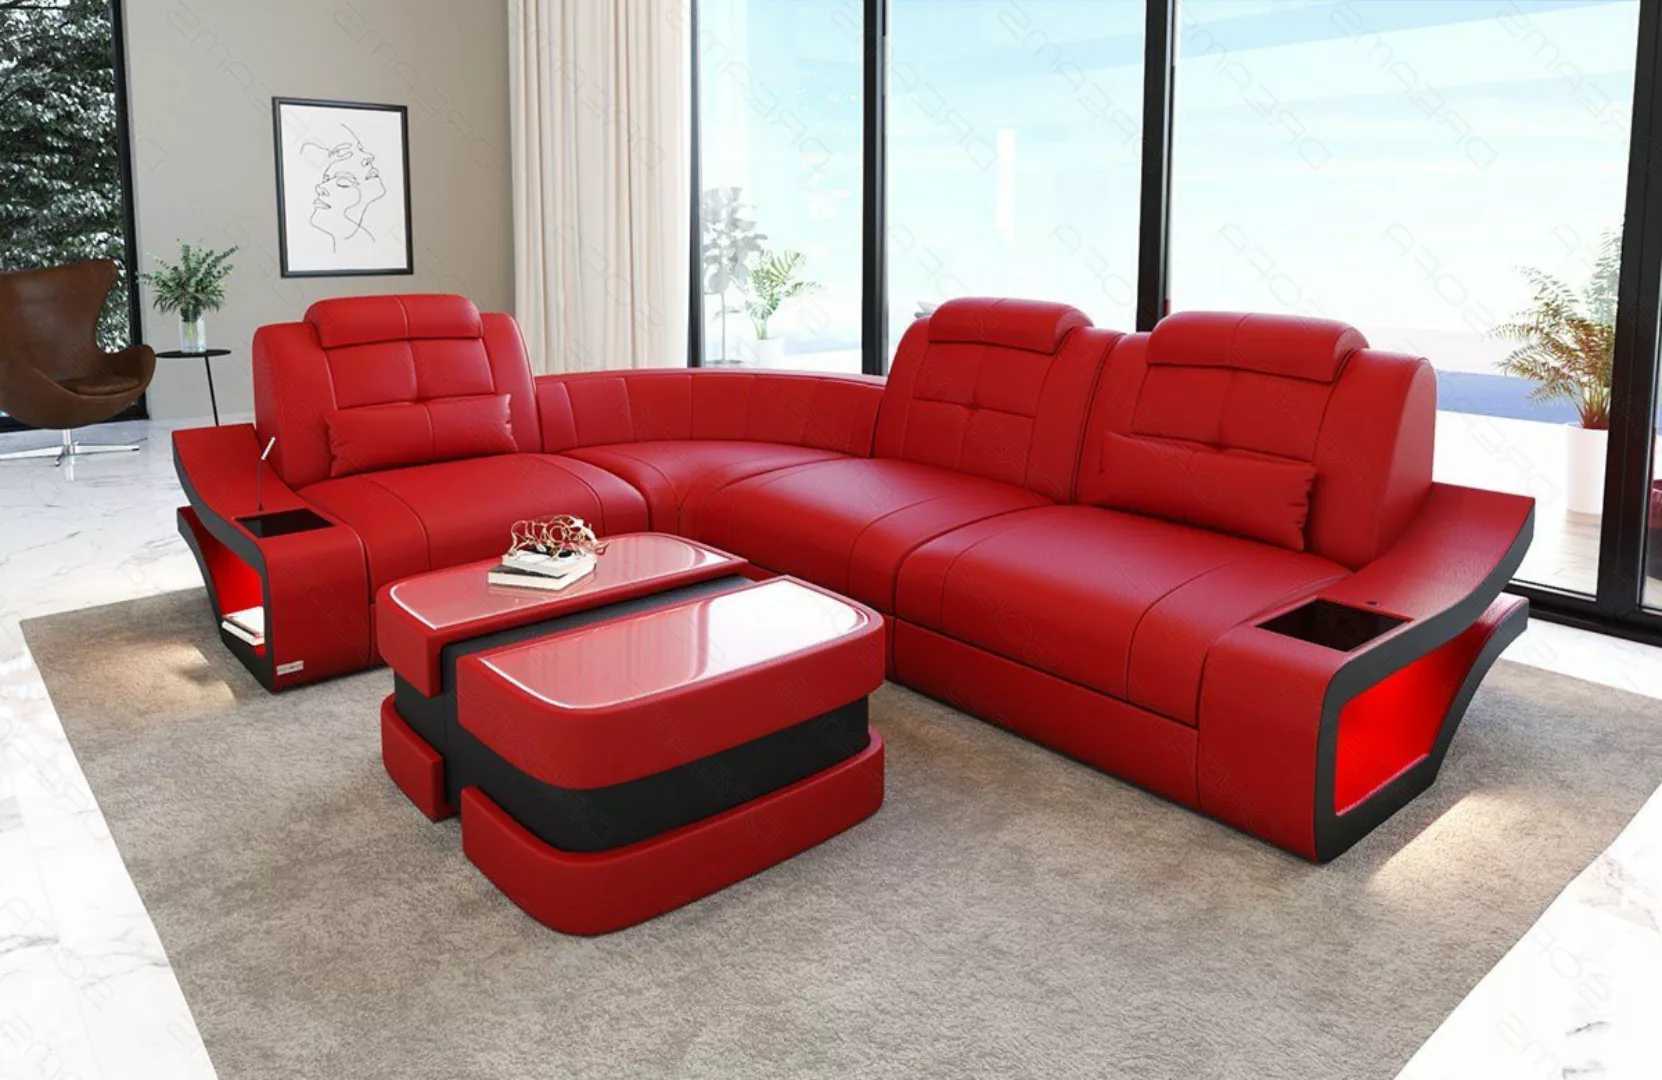 Sofa Dreams Ecksofa Leder Sofa Couch Elena L Form Ledercouch, L-Form Leders günstig online kaufen